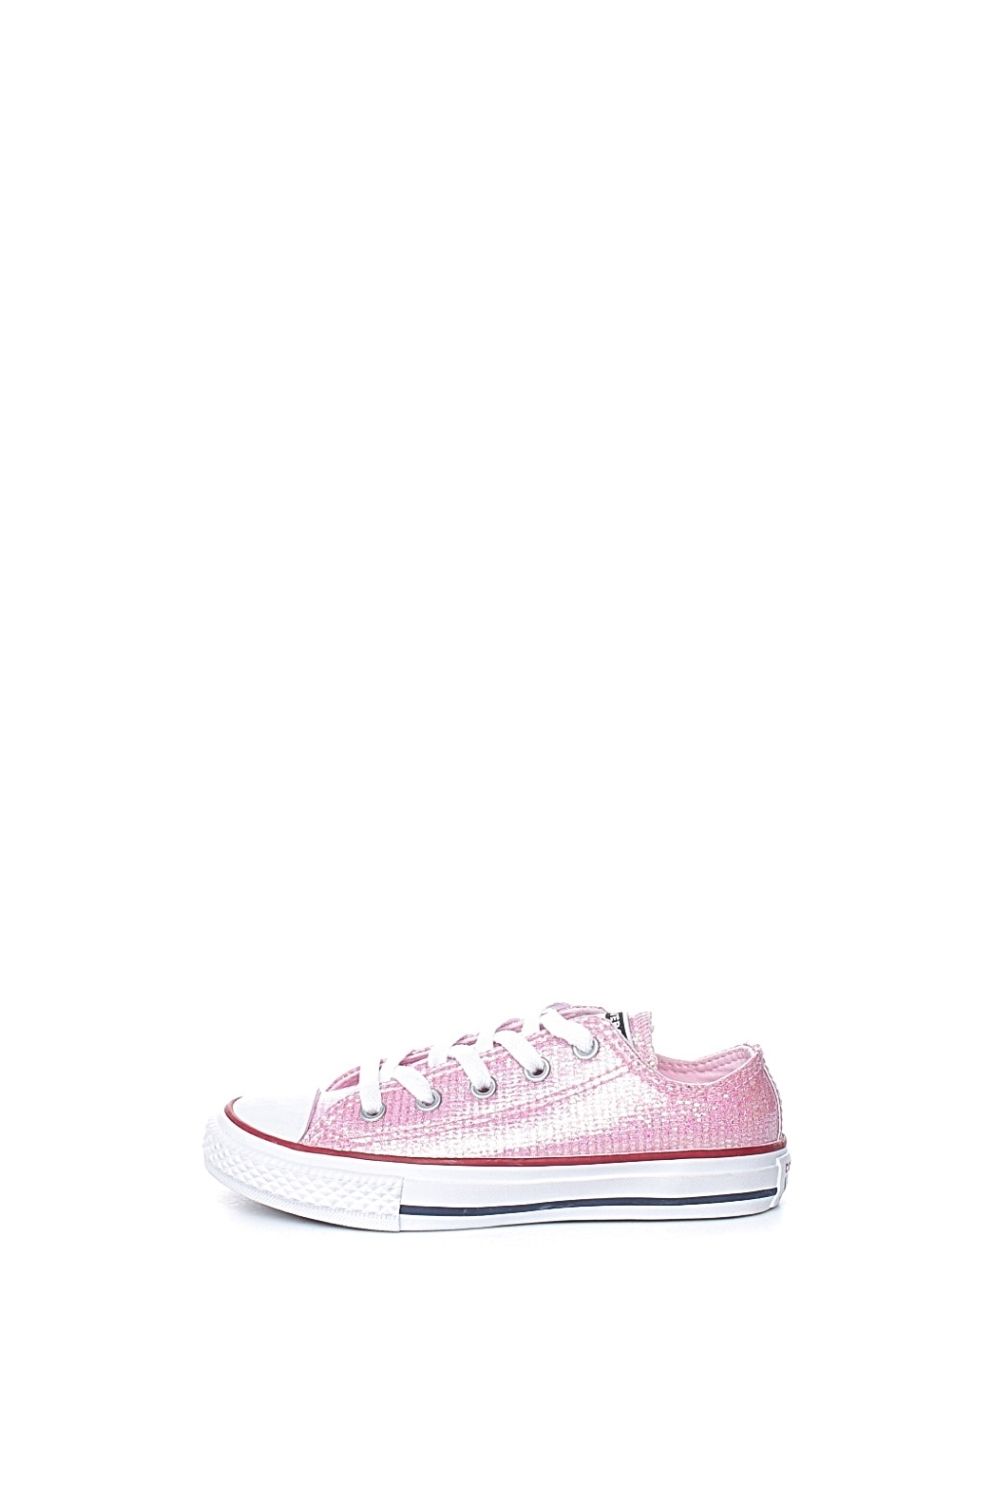 CONVERSE - Παιδικά sneakers με glitter CONVERSE Chuck Taylor All Star ροζ Παιδικά/Girls/Παπούτσια/Sneakers